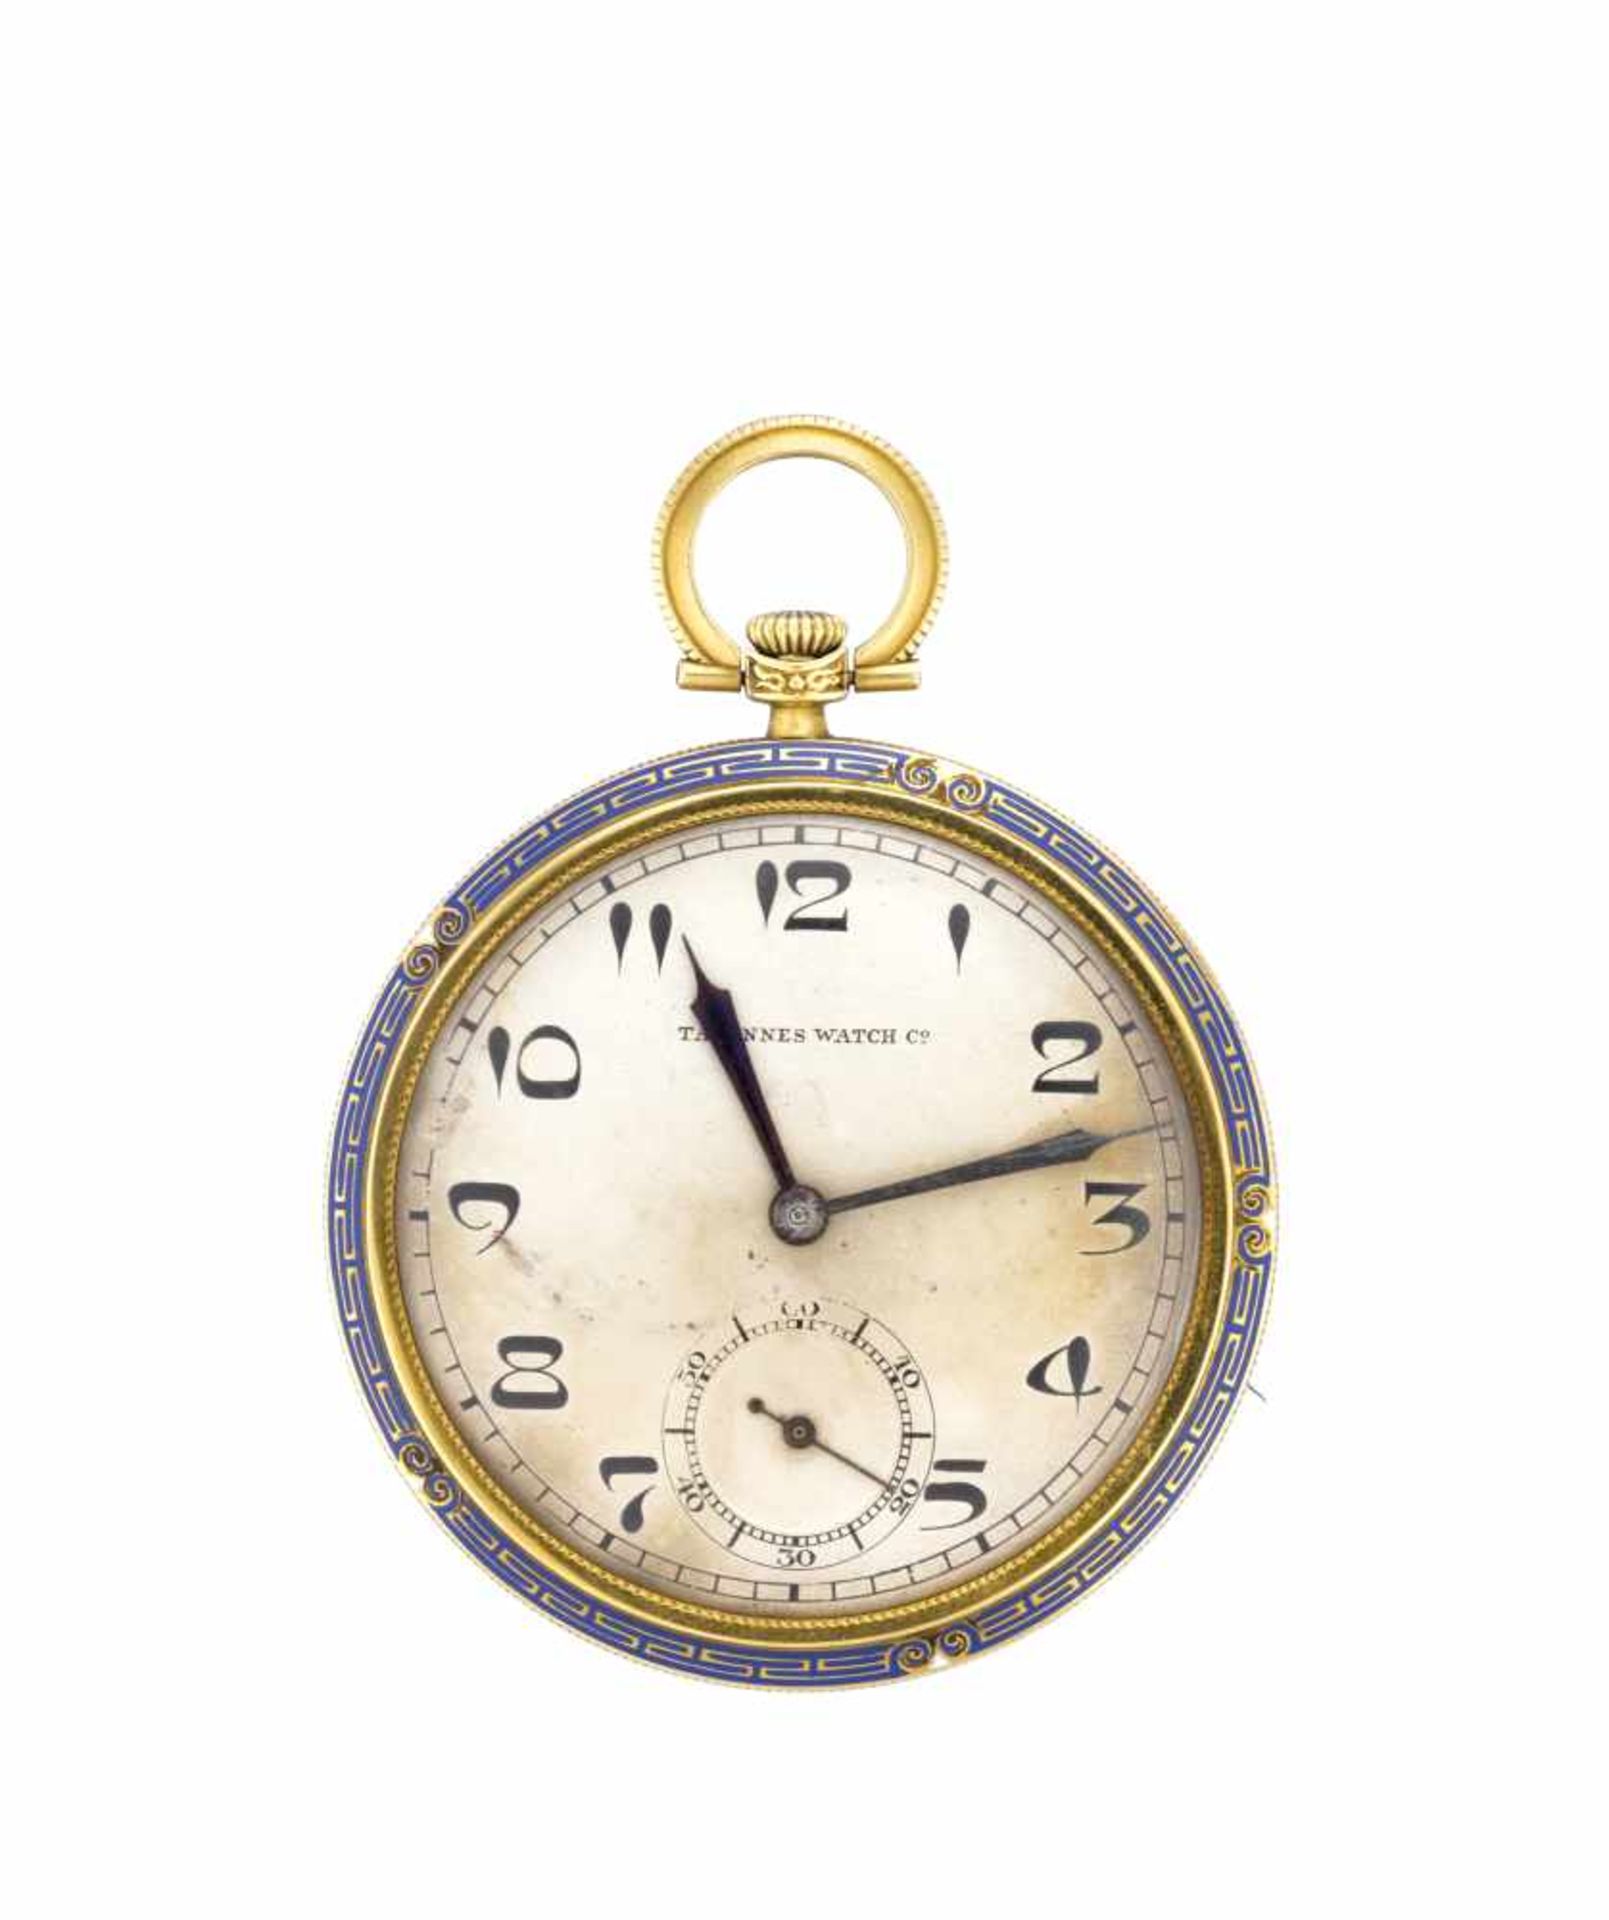 TAVANNES WATCH&CO 18K gold pocket watch with enamel decorationFirst half 20th centuryDial